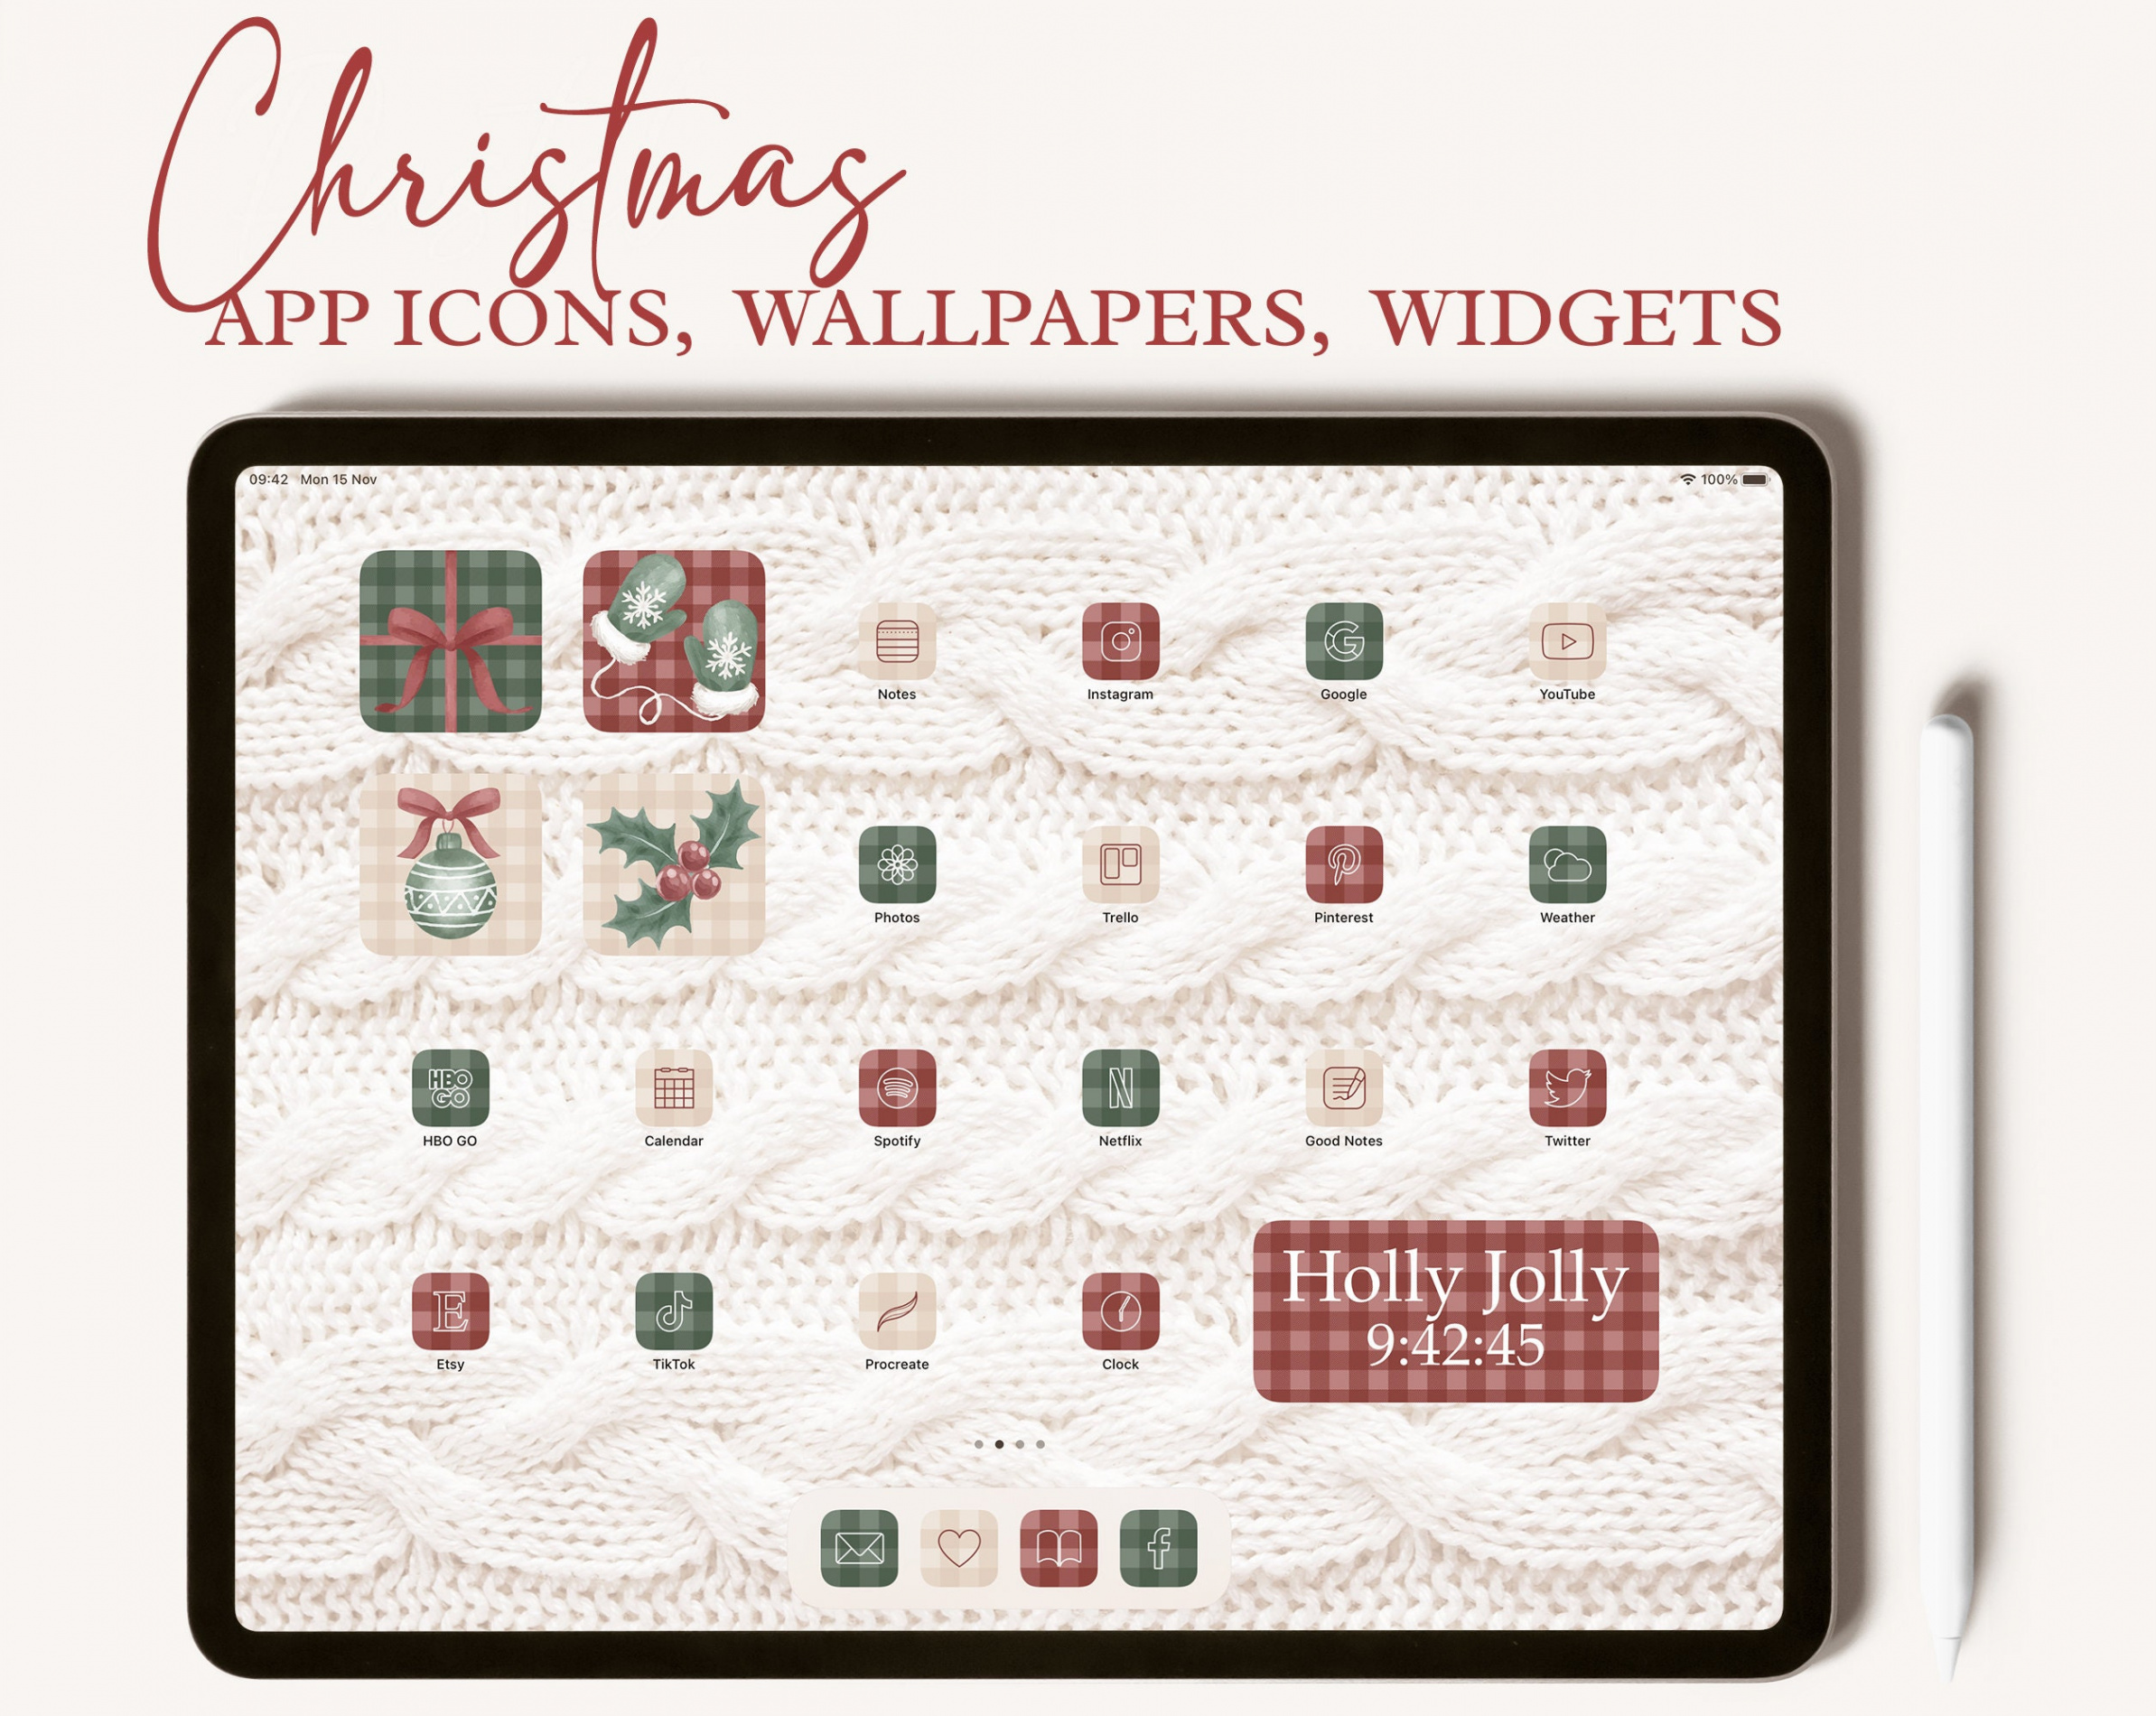 Christmas iPad Desktop Icons, iPad App Icons, iPad Wallpapers and